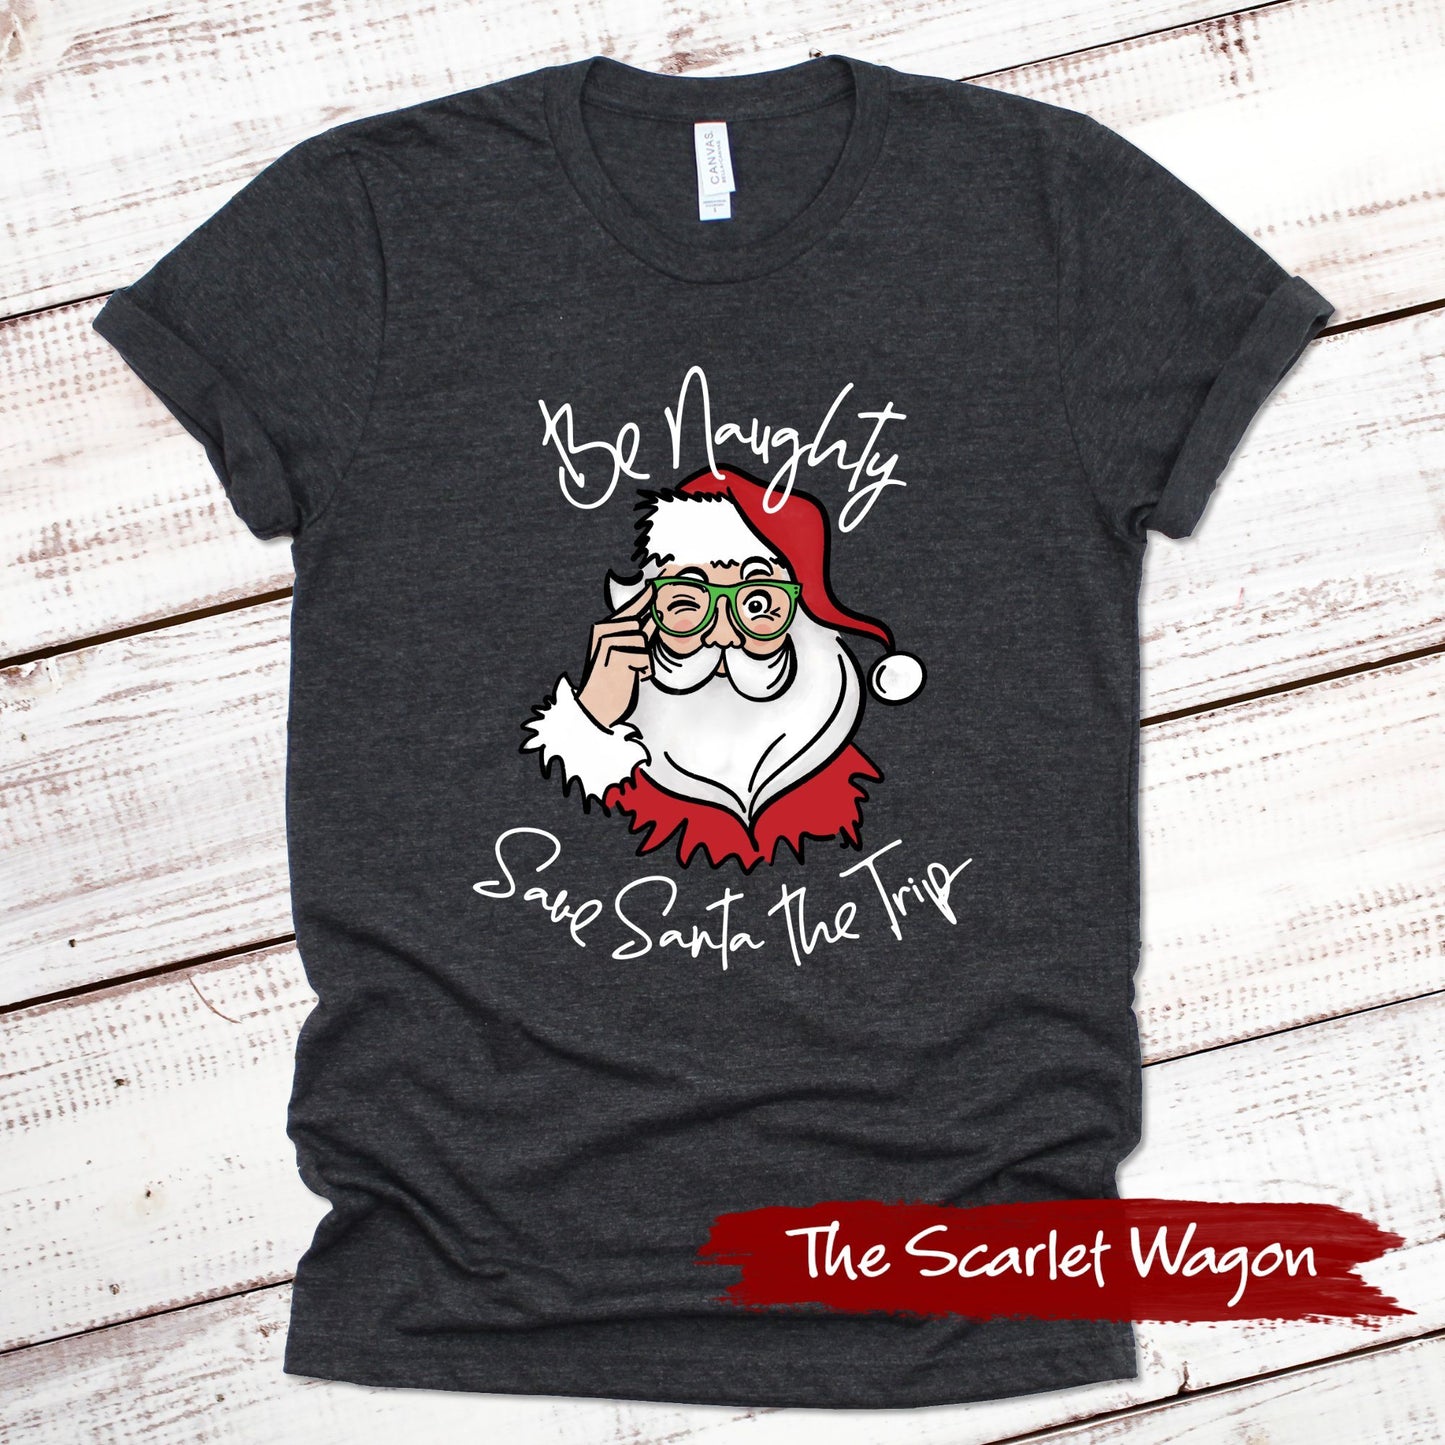 Be Naughty Save Santa the Trip Christmas Shirt Scarlet Wagon Dark Gray Heather XS 